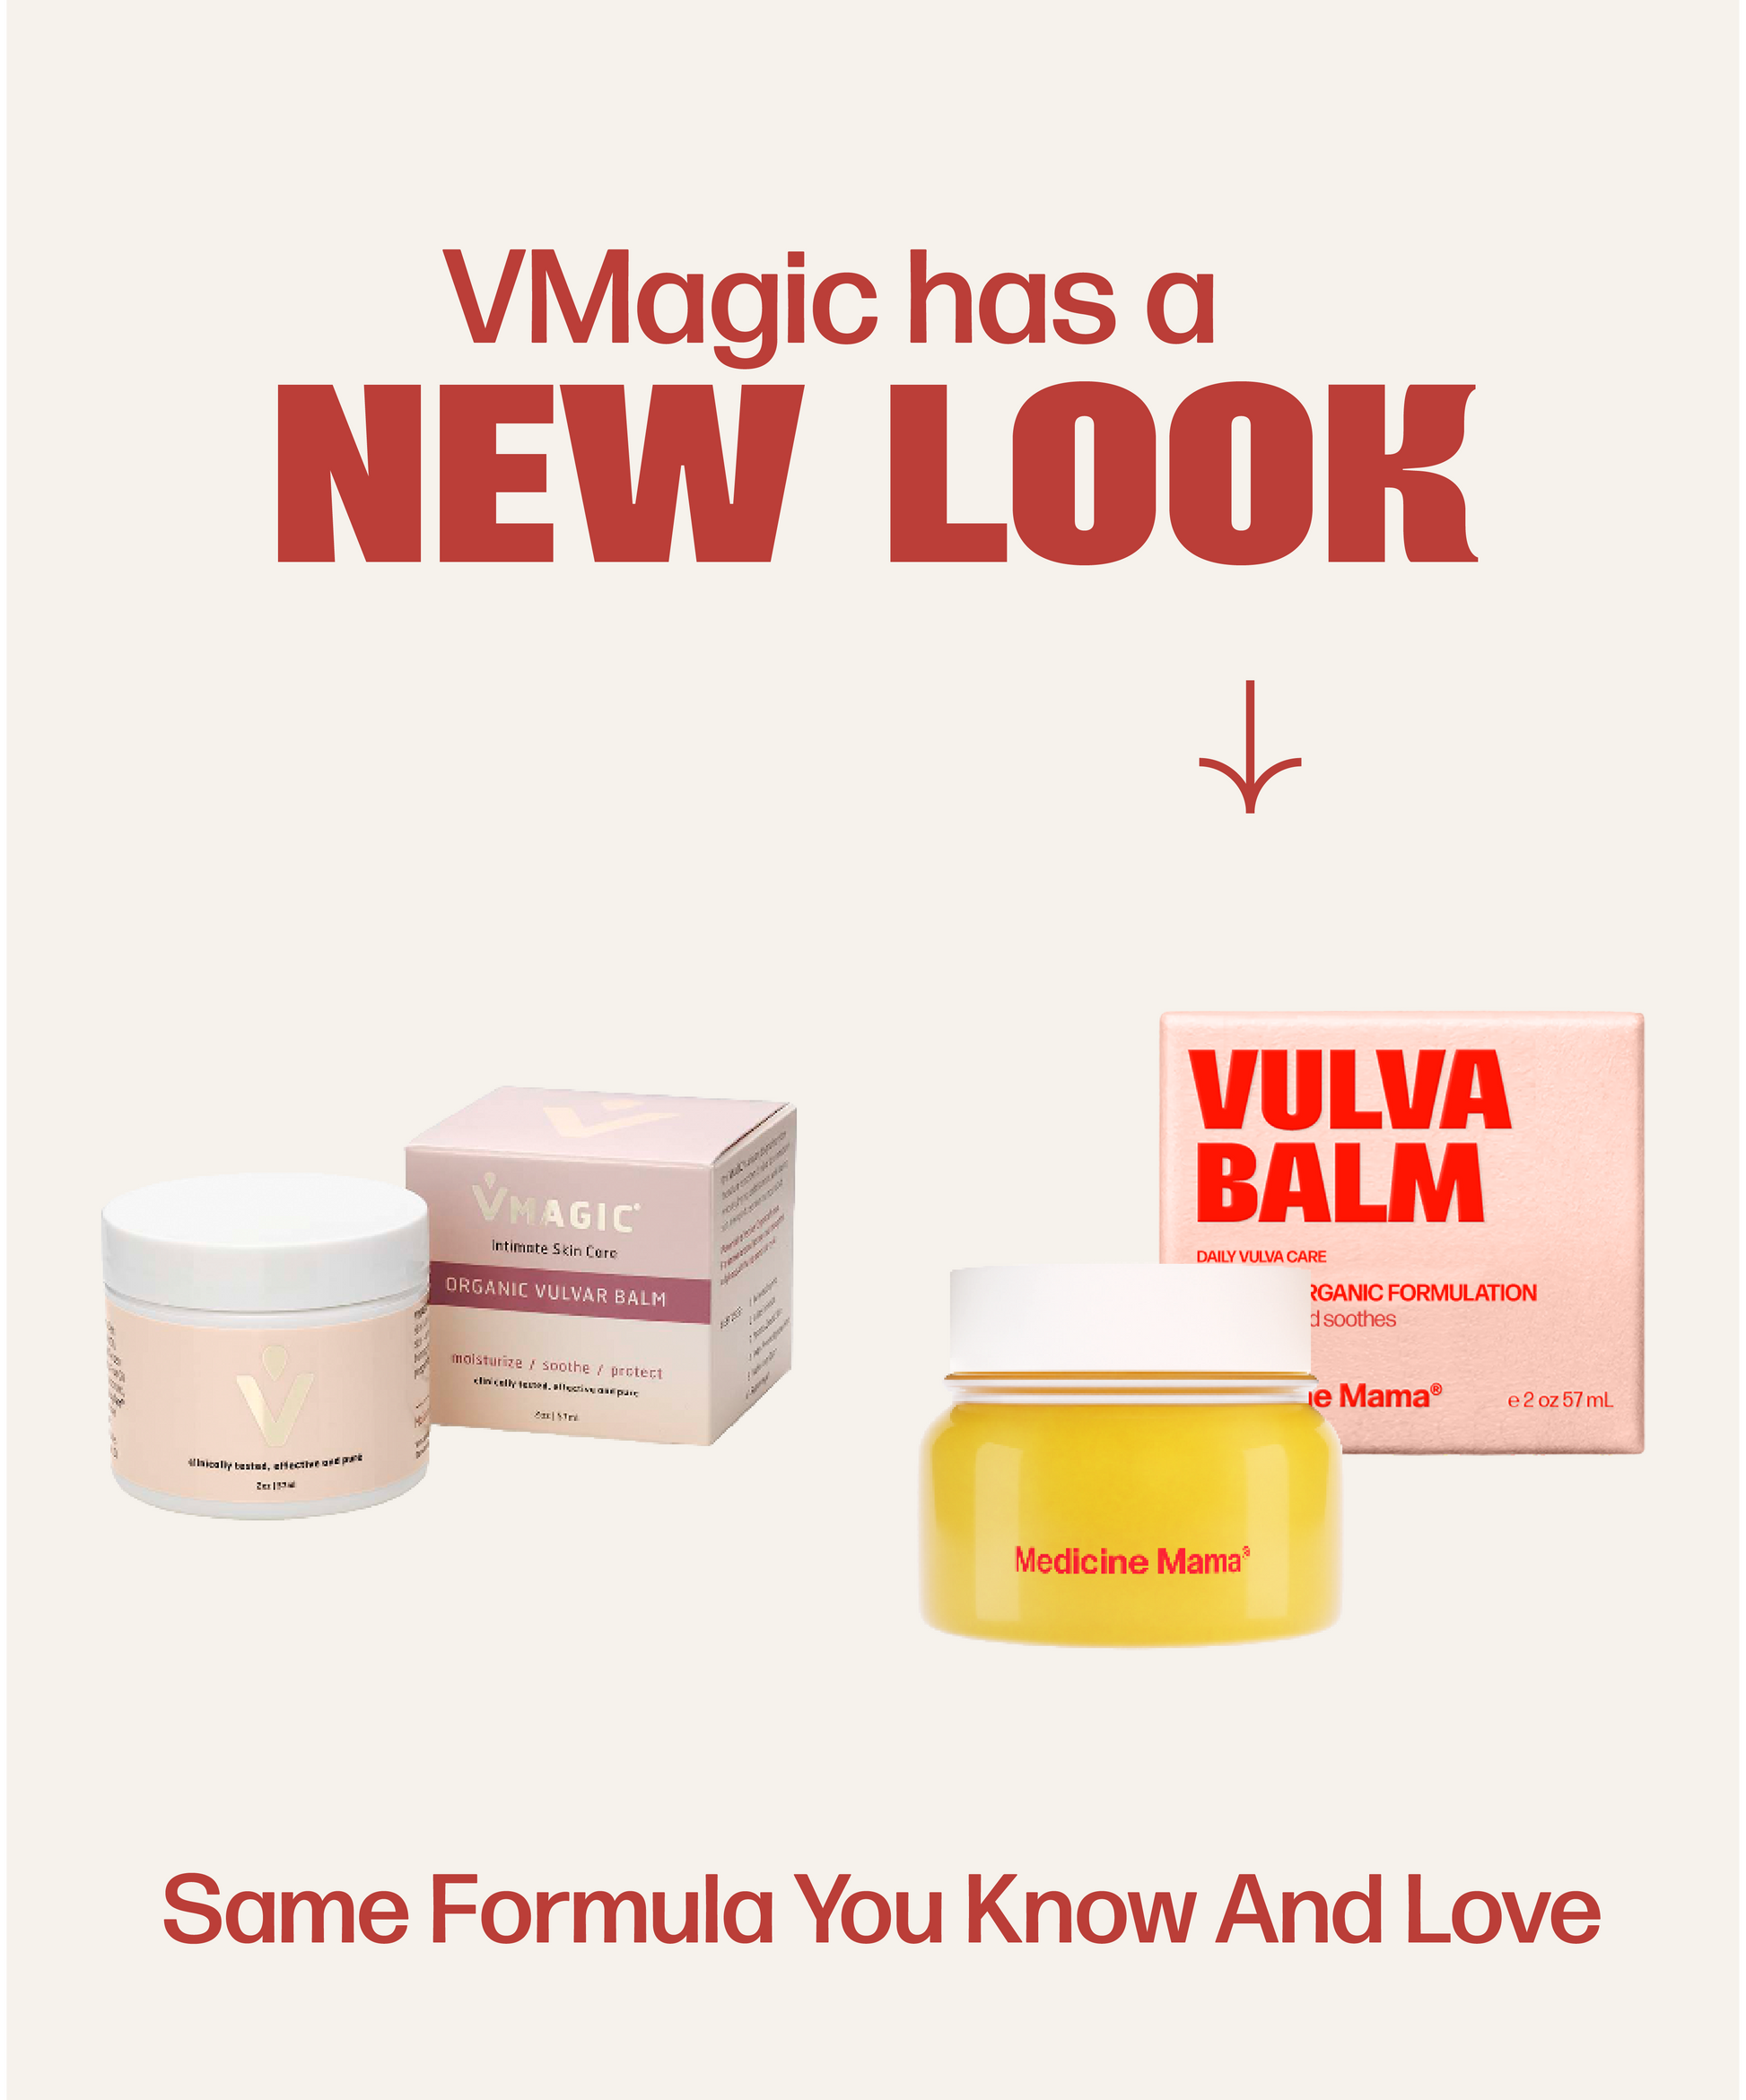 Medicine Mama's VMAGIC® Vulva Balm, now hormone-free and organic, has a new look.